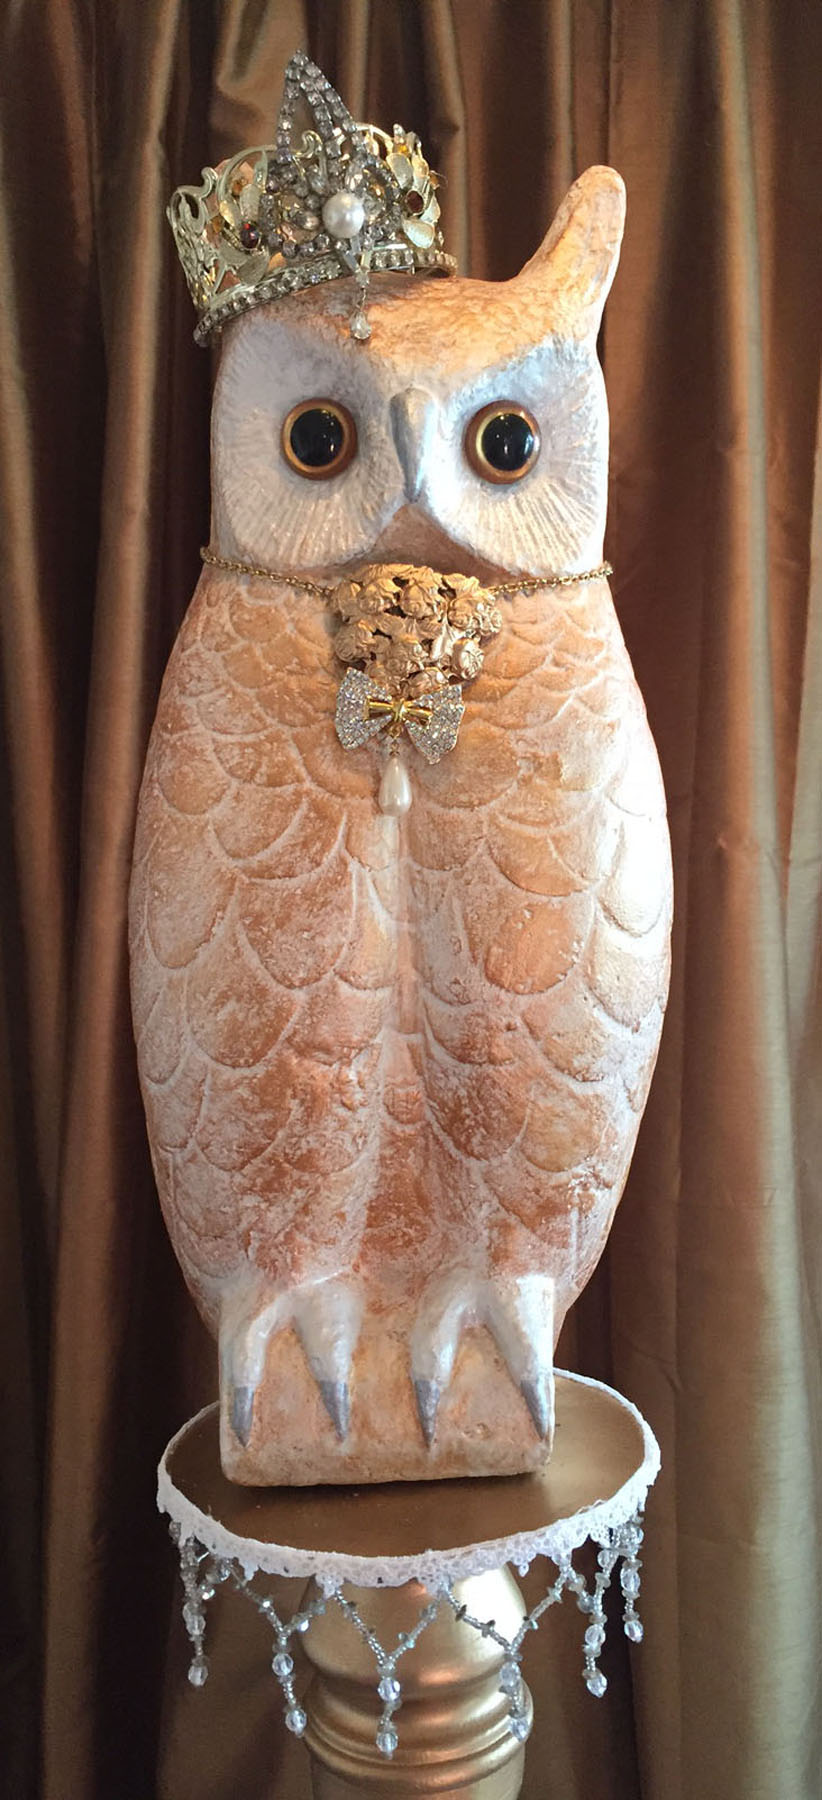 perfectly delightful owl